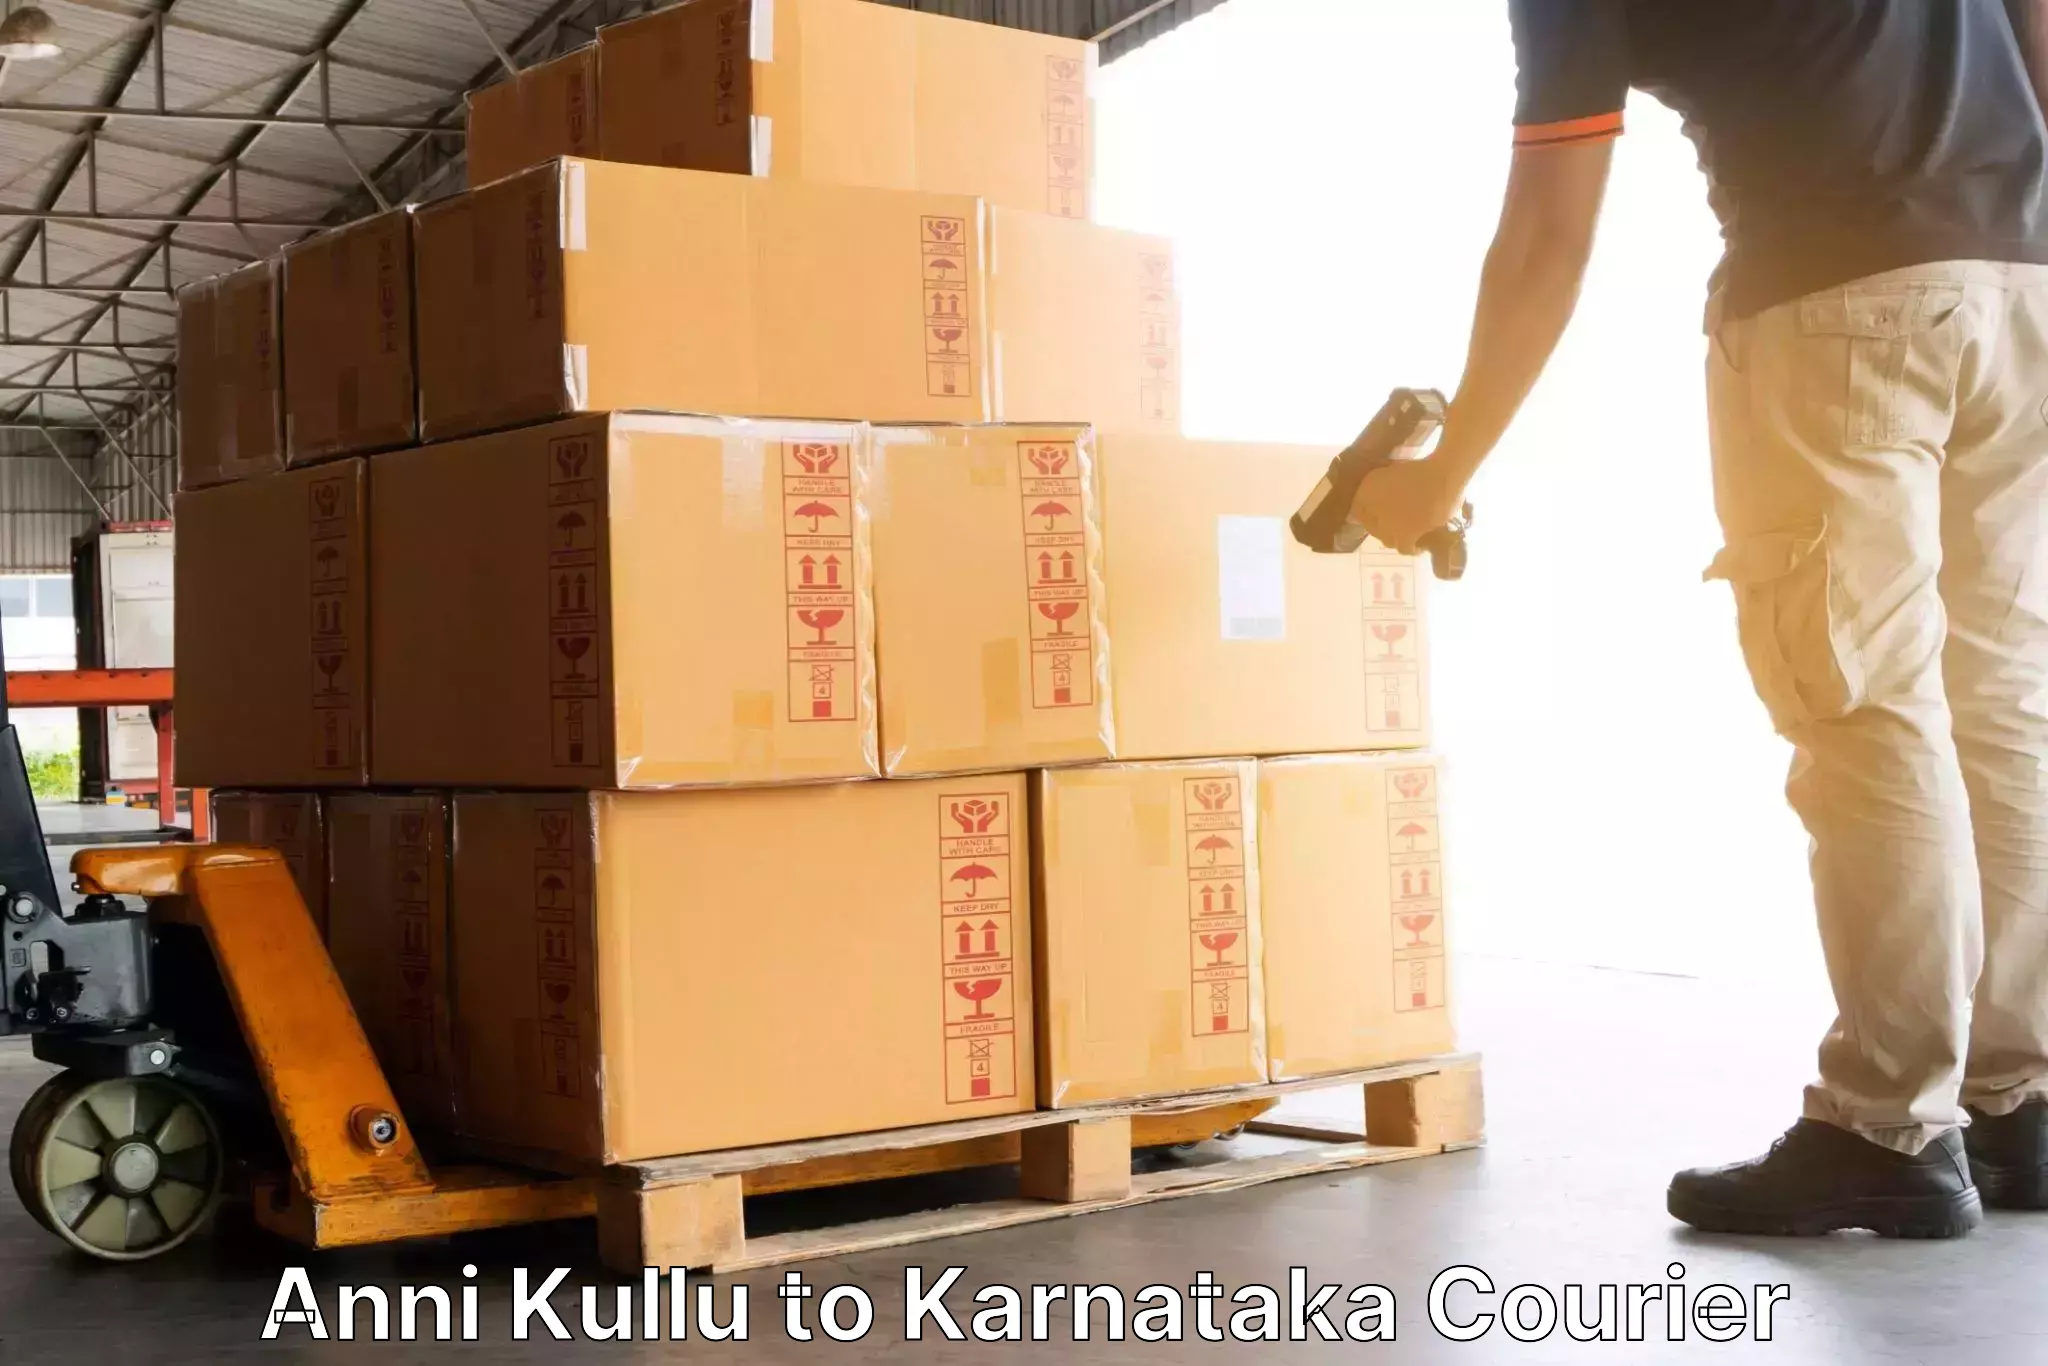 Speedy delivery service Anni Kullu to Karnataka